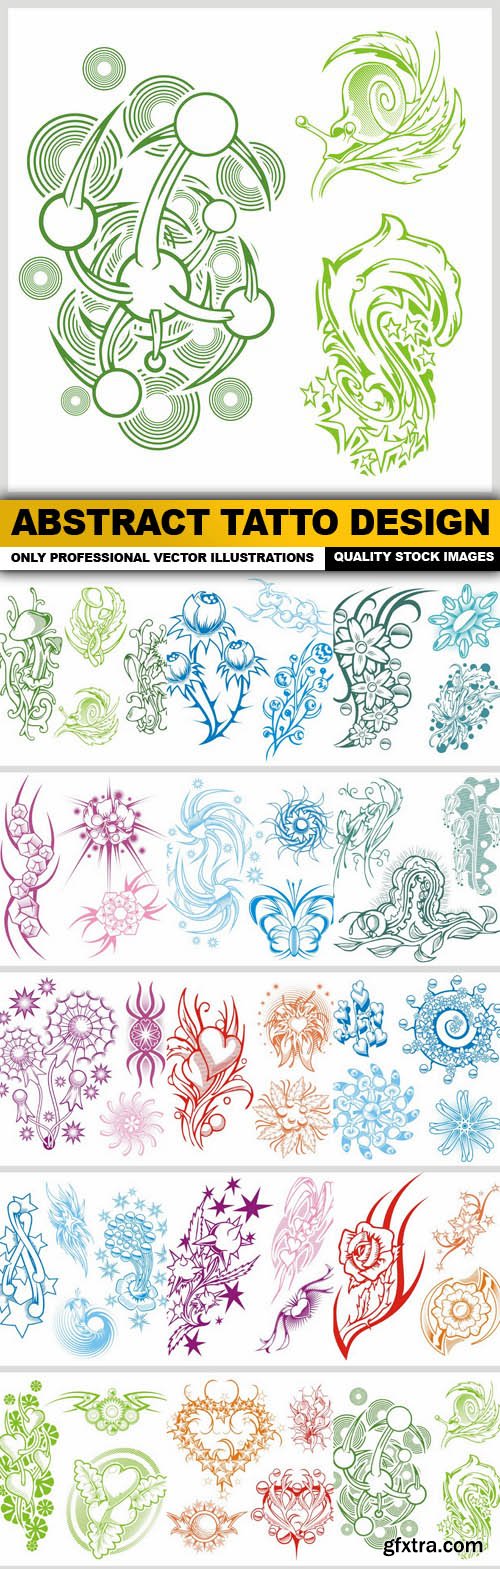 Abstract Tatto Design - 15 Vector